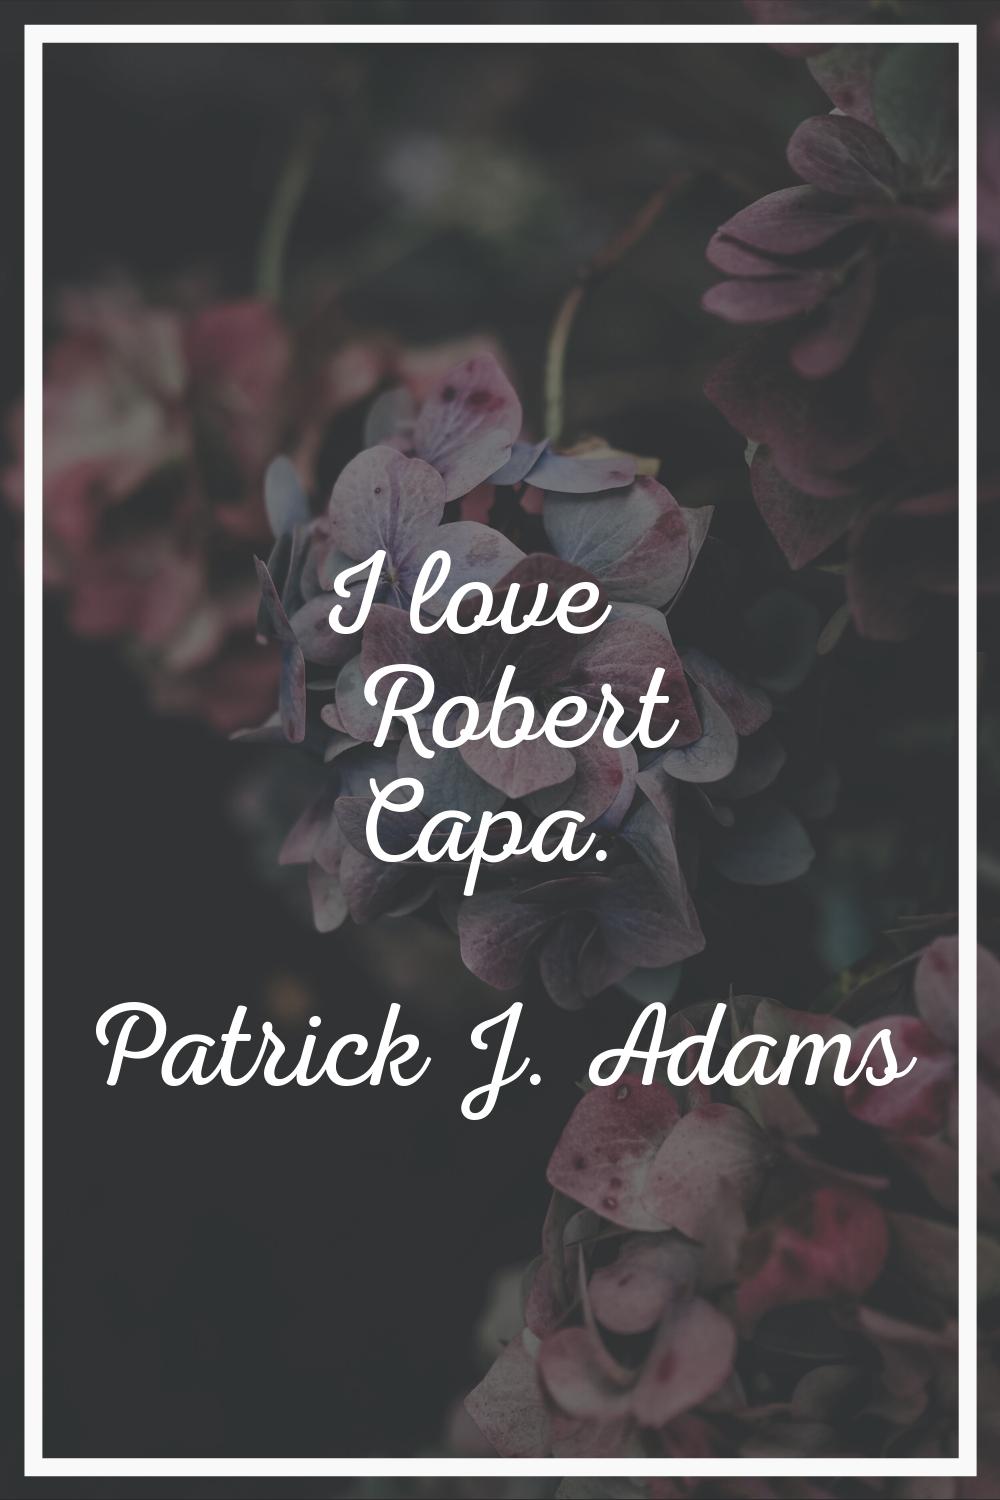 I love Robert Capa.